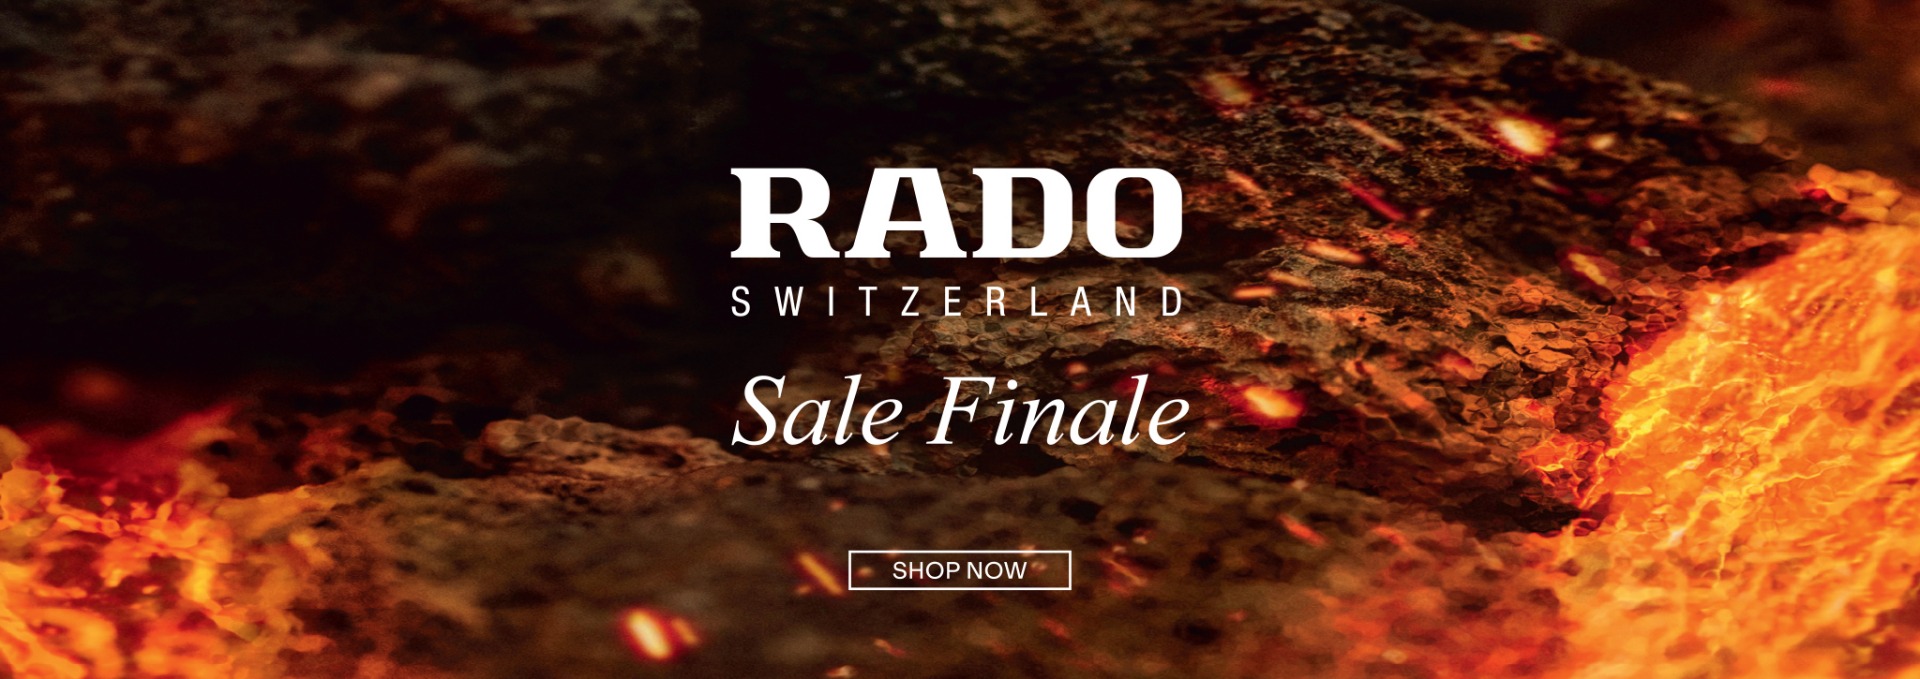 RADO SWITZERLAND, SALE FINALE, SHOP NOW